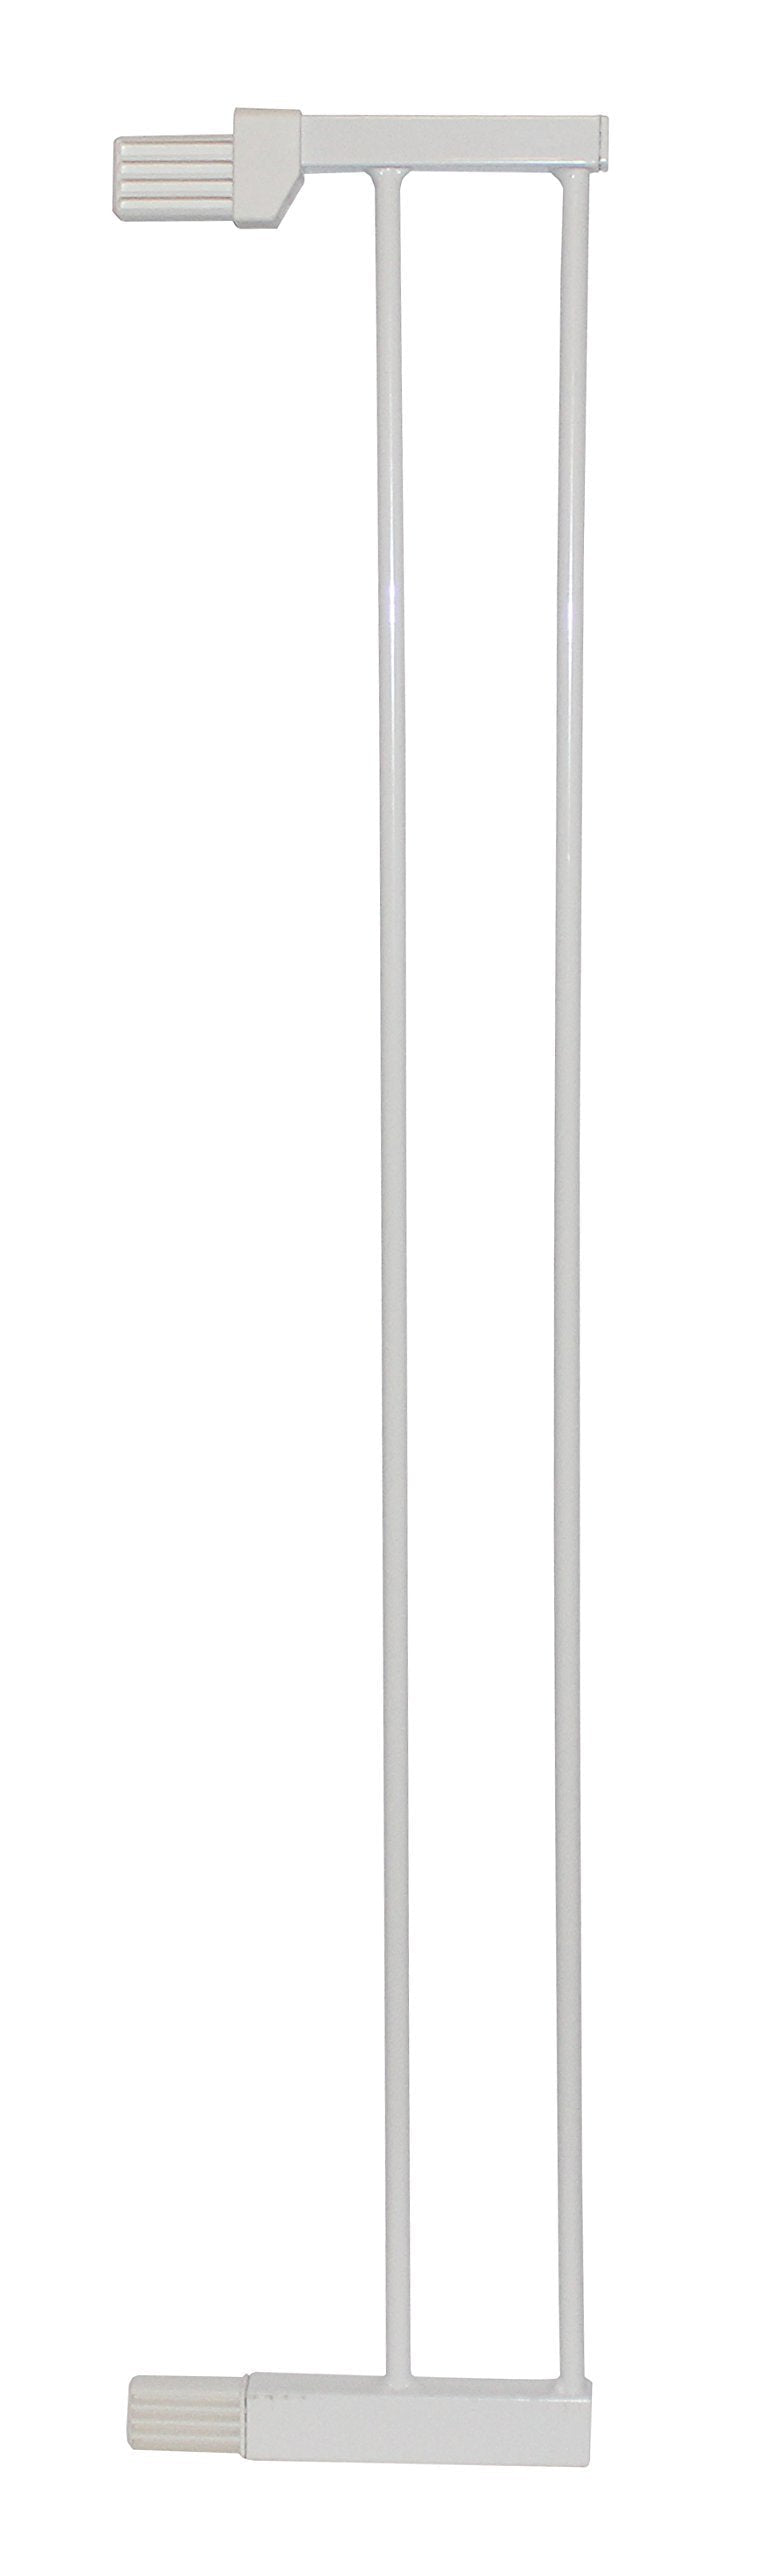 [Australia] - Cardinal Gates Medium Extension for Extra Tall Premium Pressure Gate White 